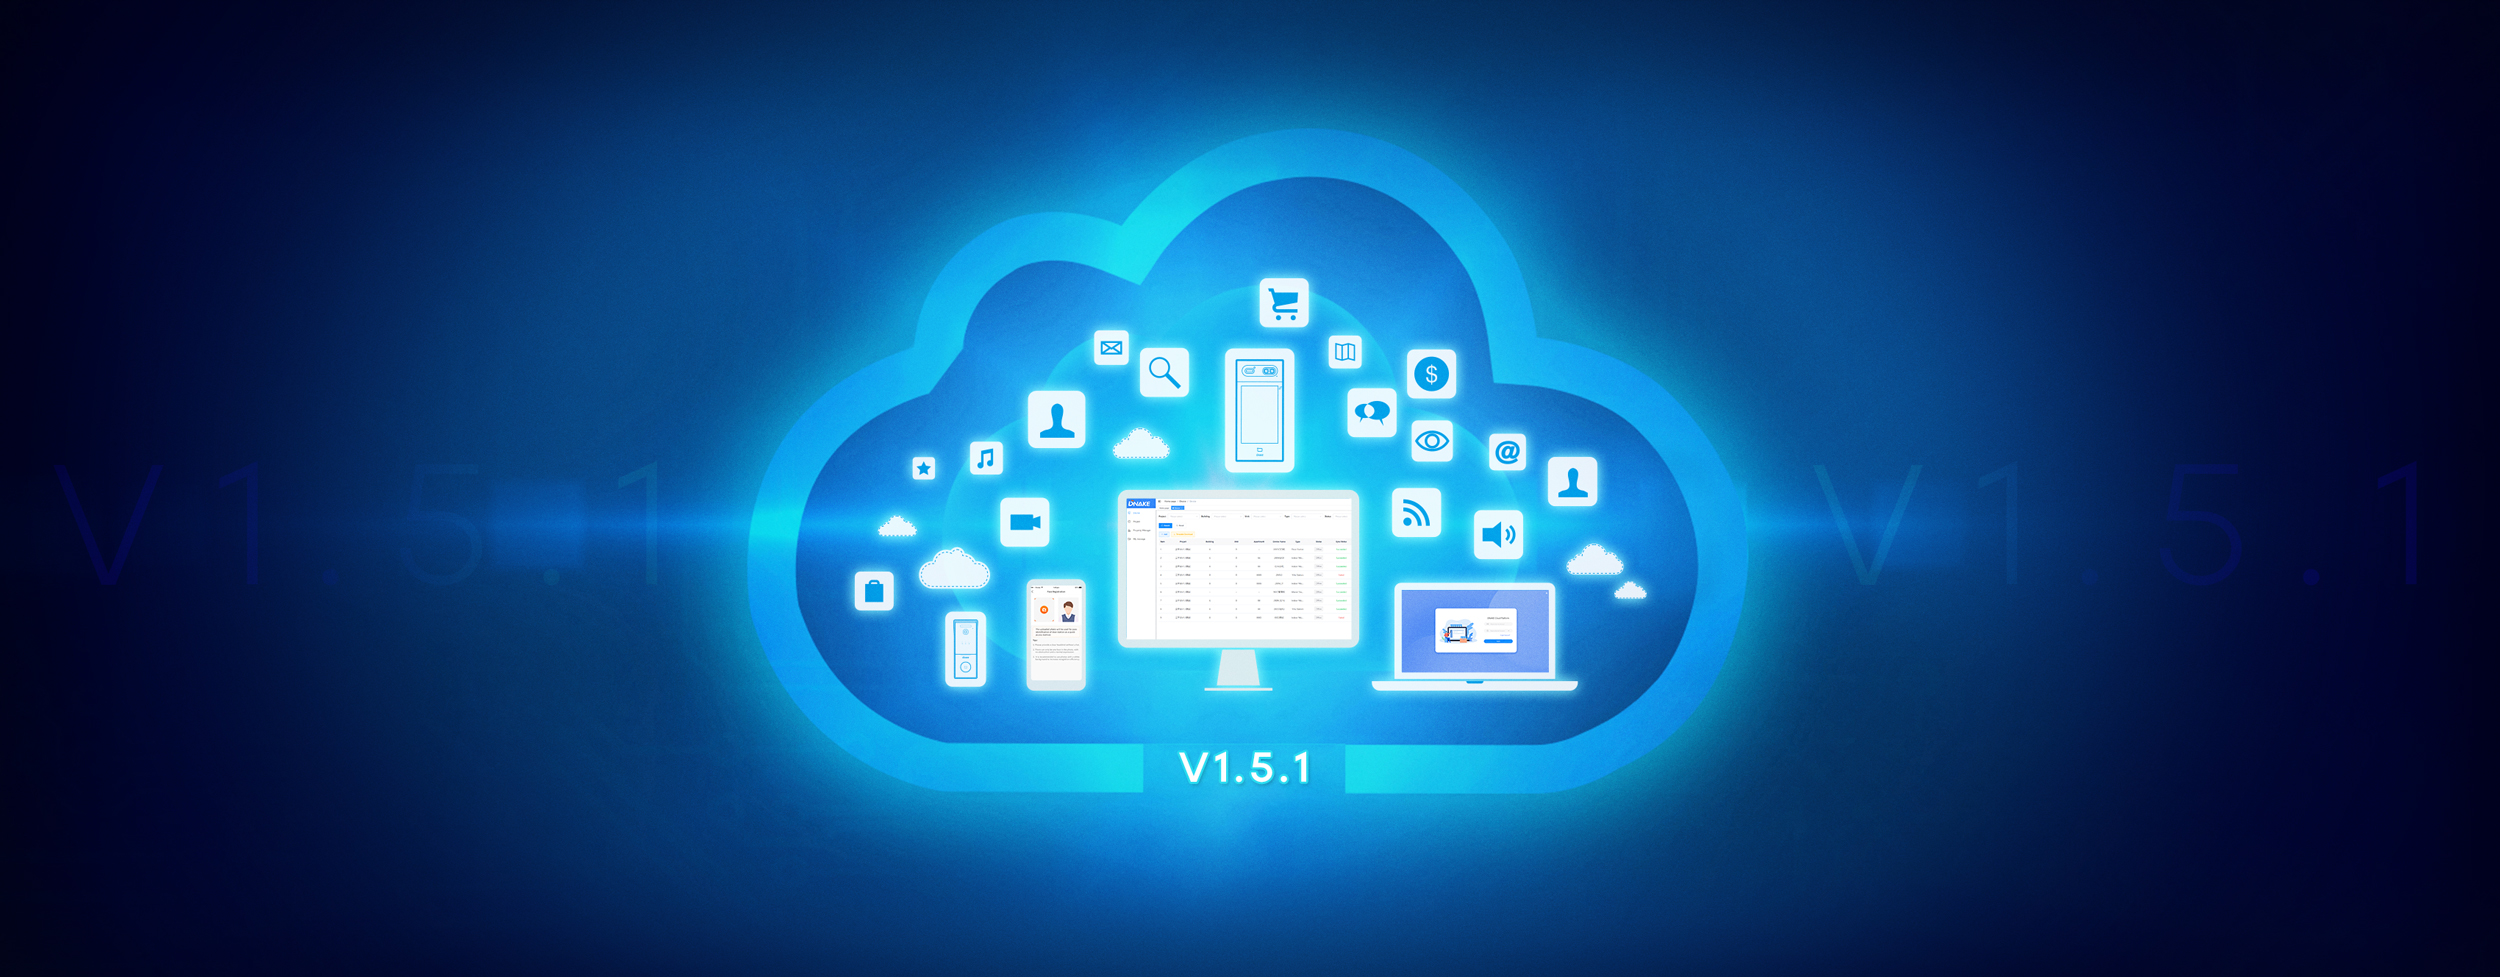 Cloud-Plattform-V1.5.1 Banner